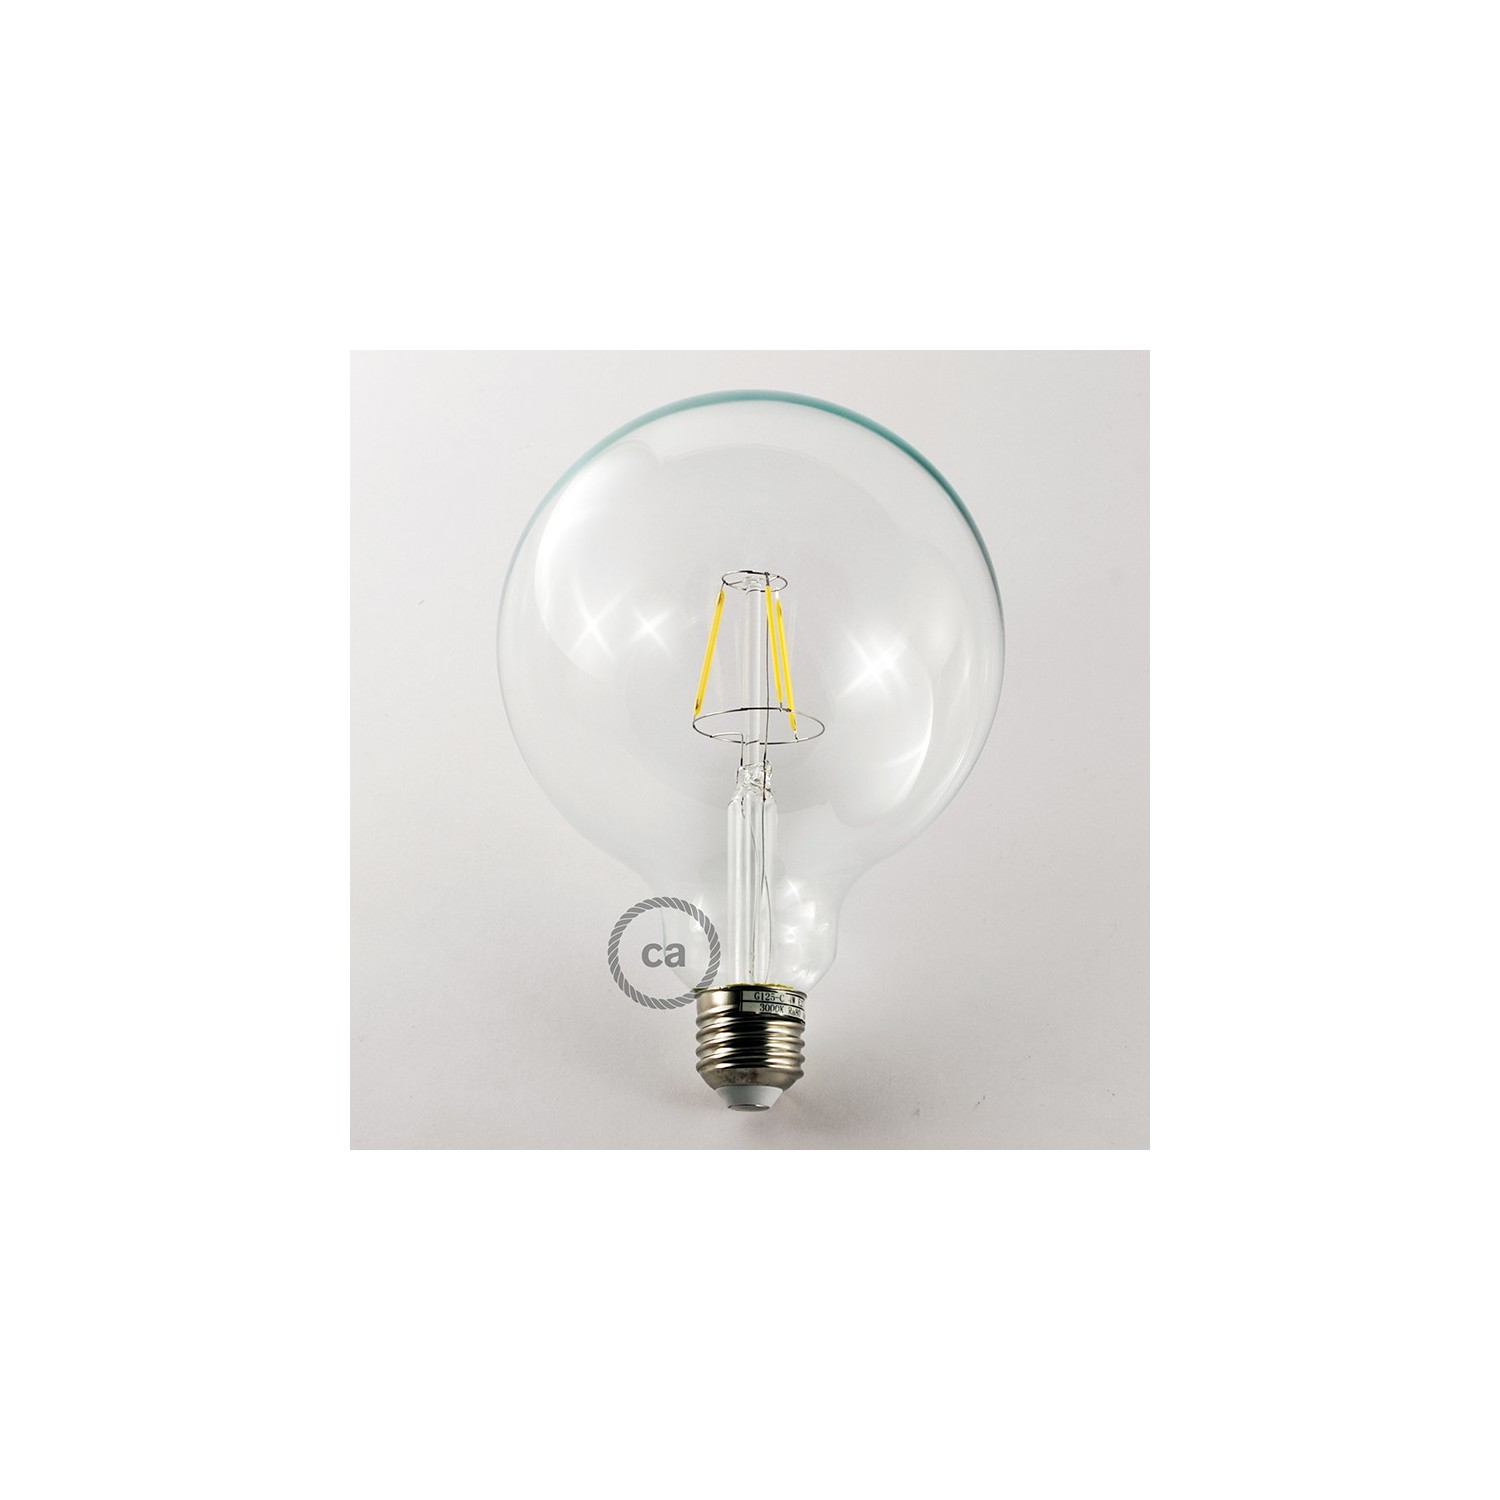 Uitputten Typisch Kerel Vintage decoratieve 4W LED lamp met kooldraad effect Globe XL G125 helder  warm licht